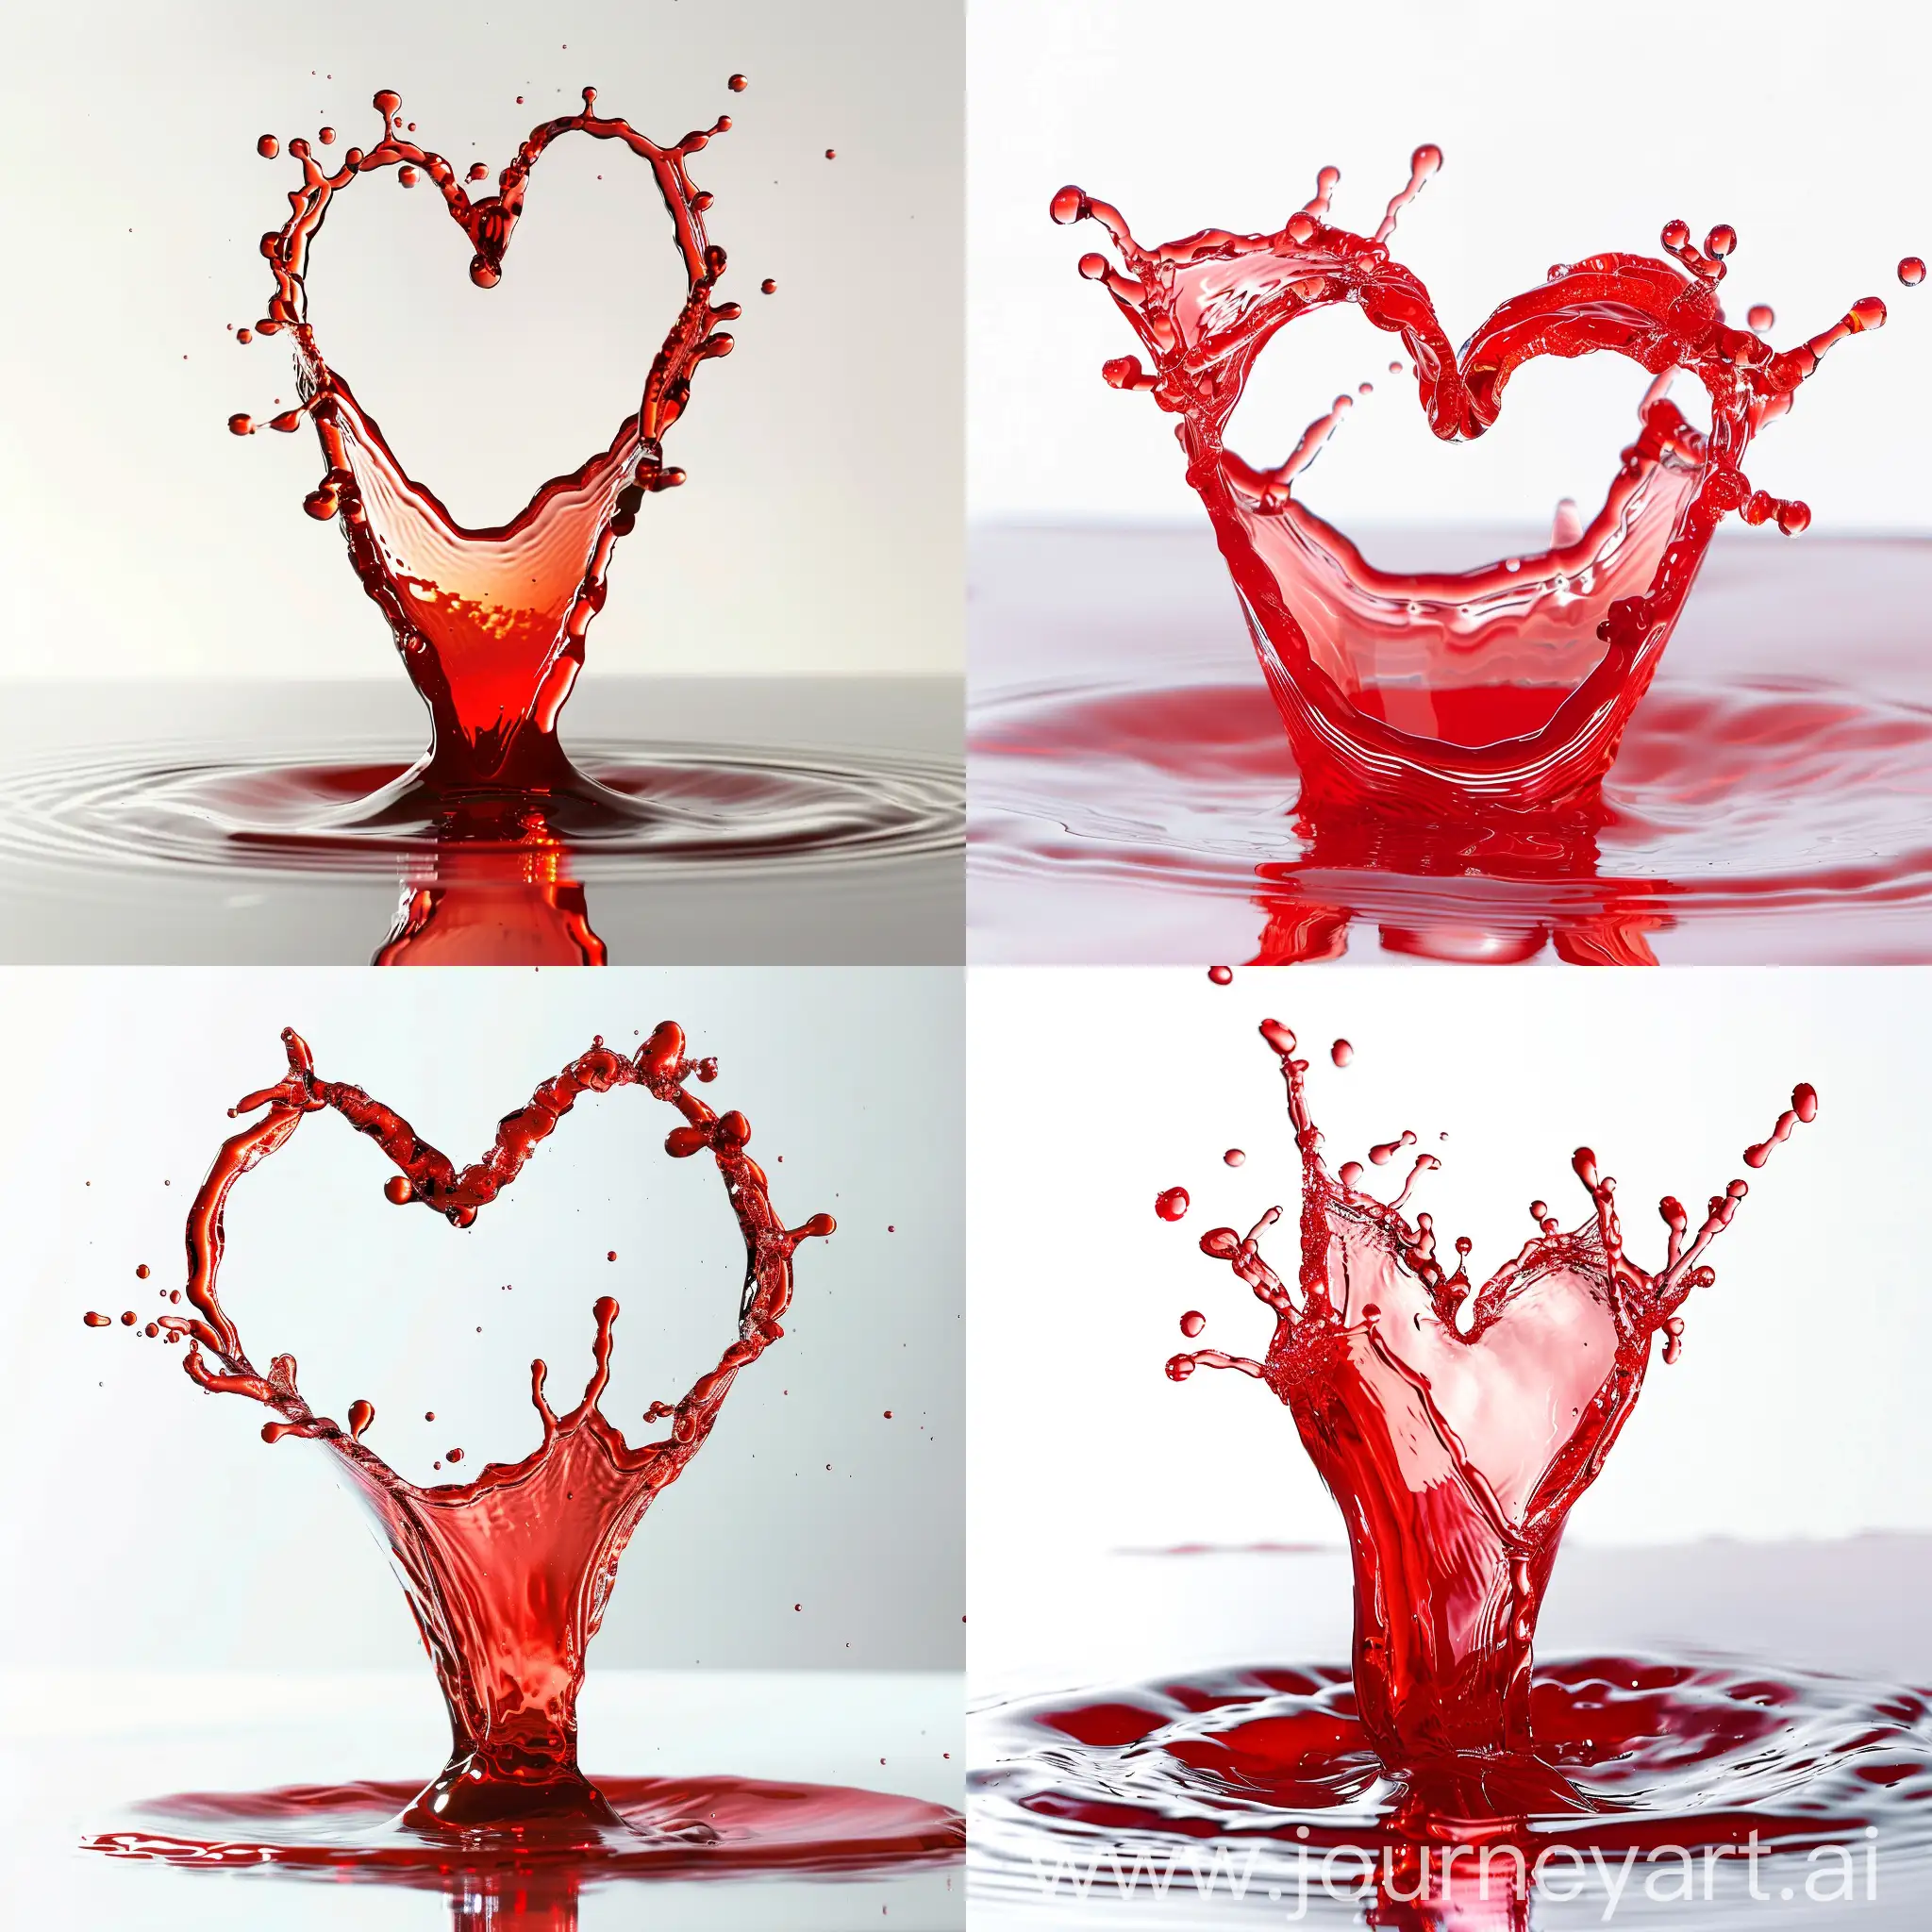 A macro shot of a red water splash shaped like a heart, on a pure white studio backdrop